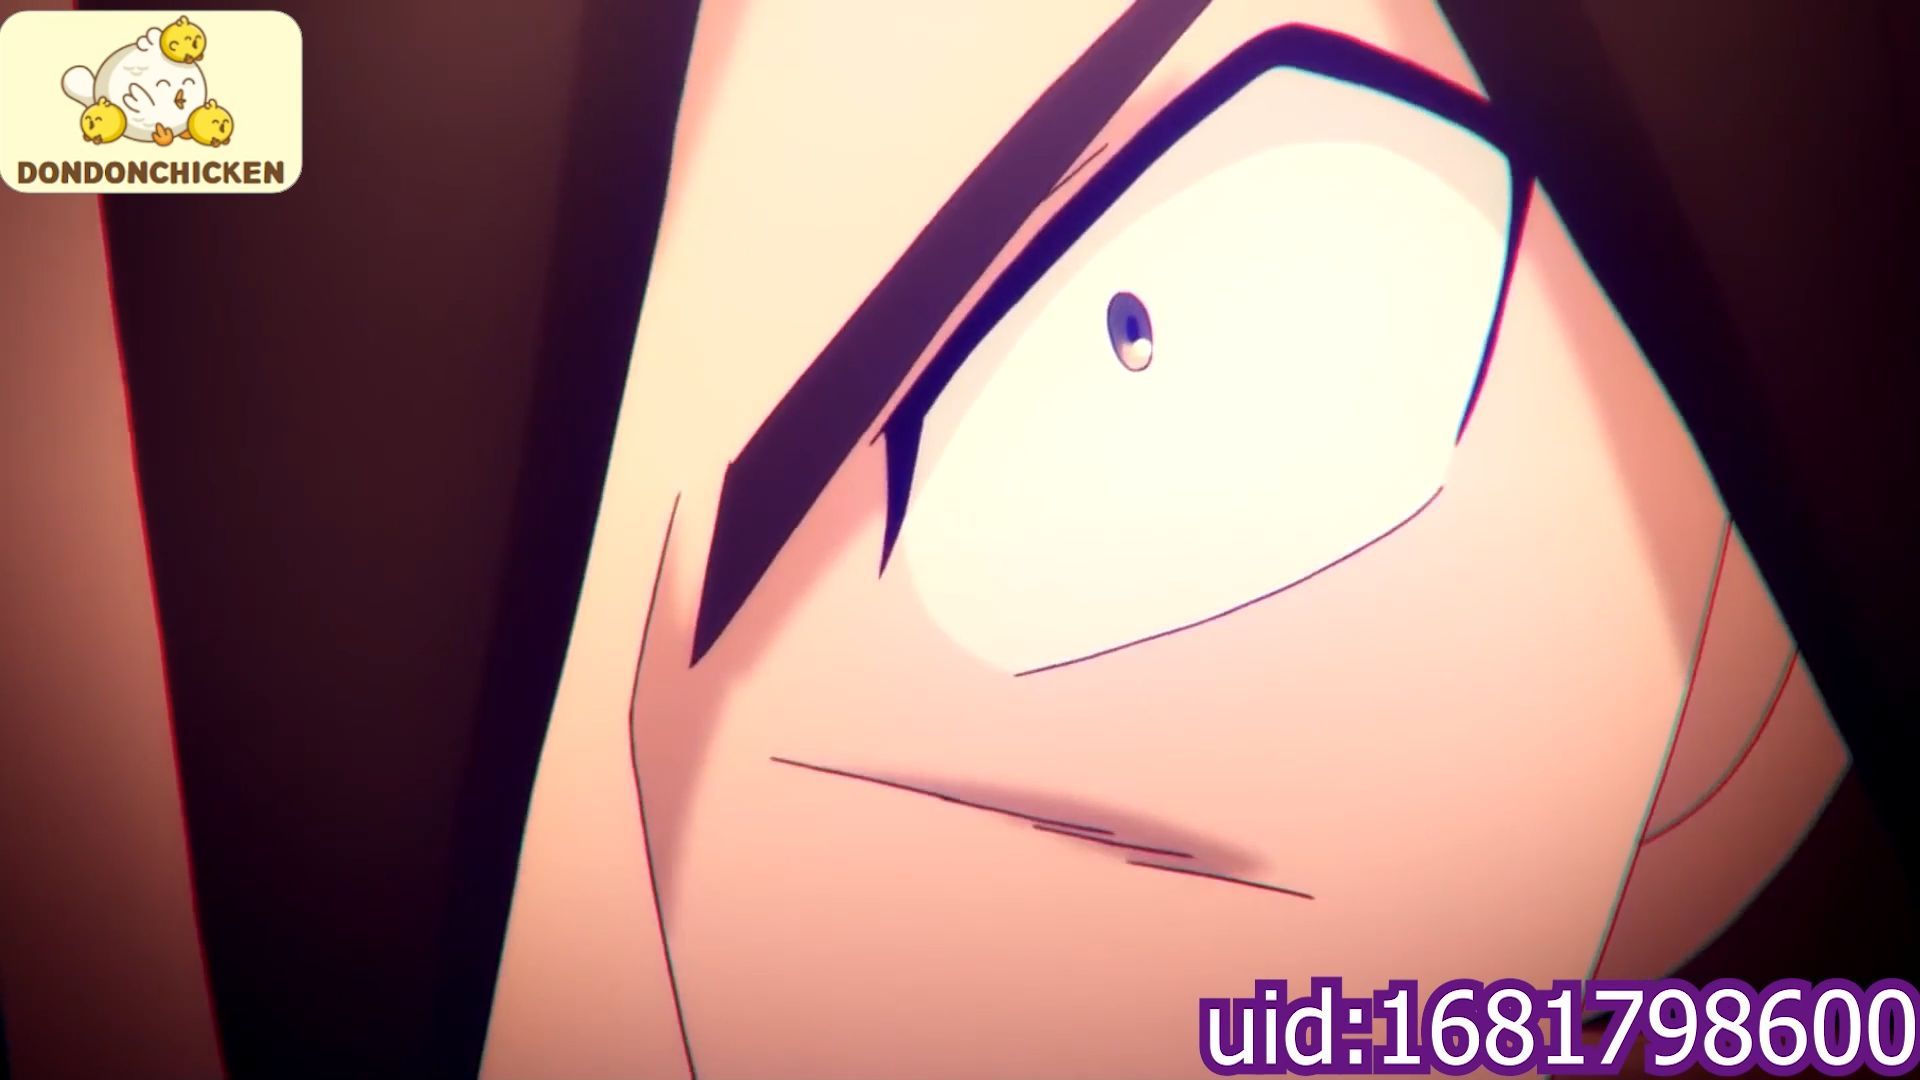 Reaction+Commentary] Yuragi-sou no Yuuna-san Episode 3 